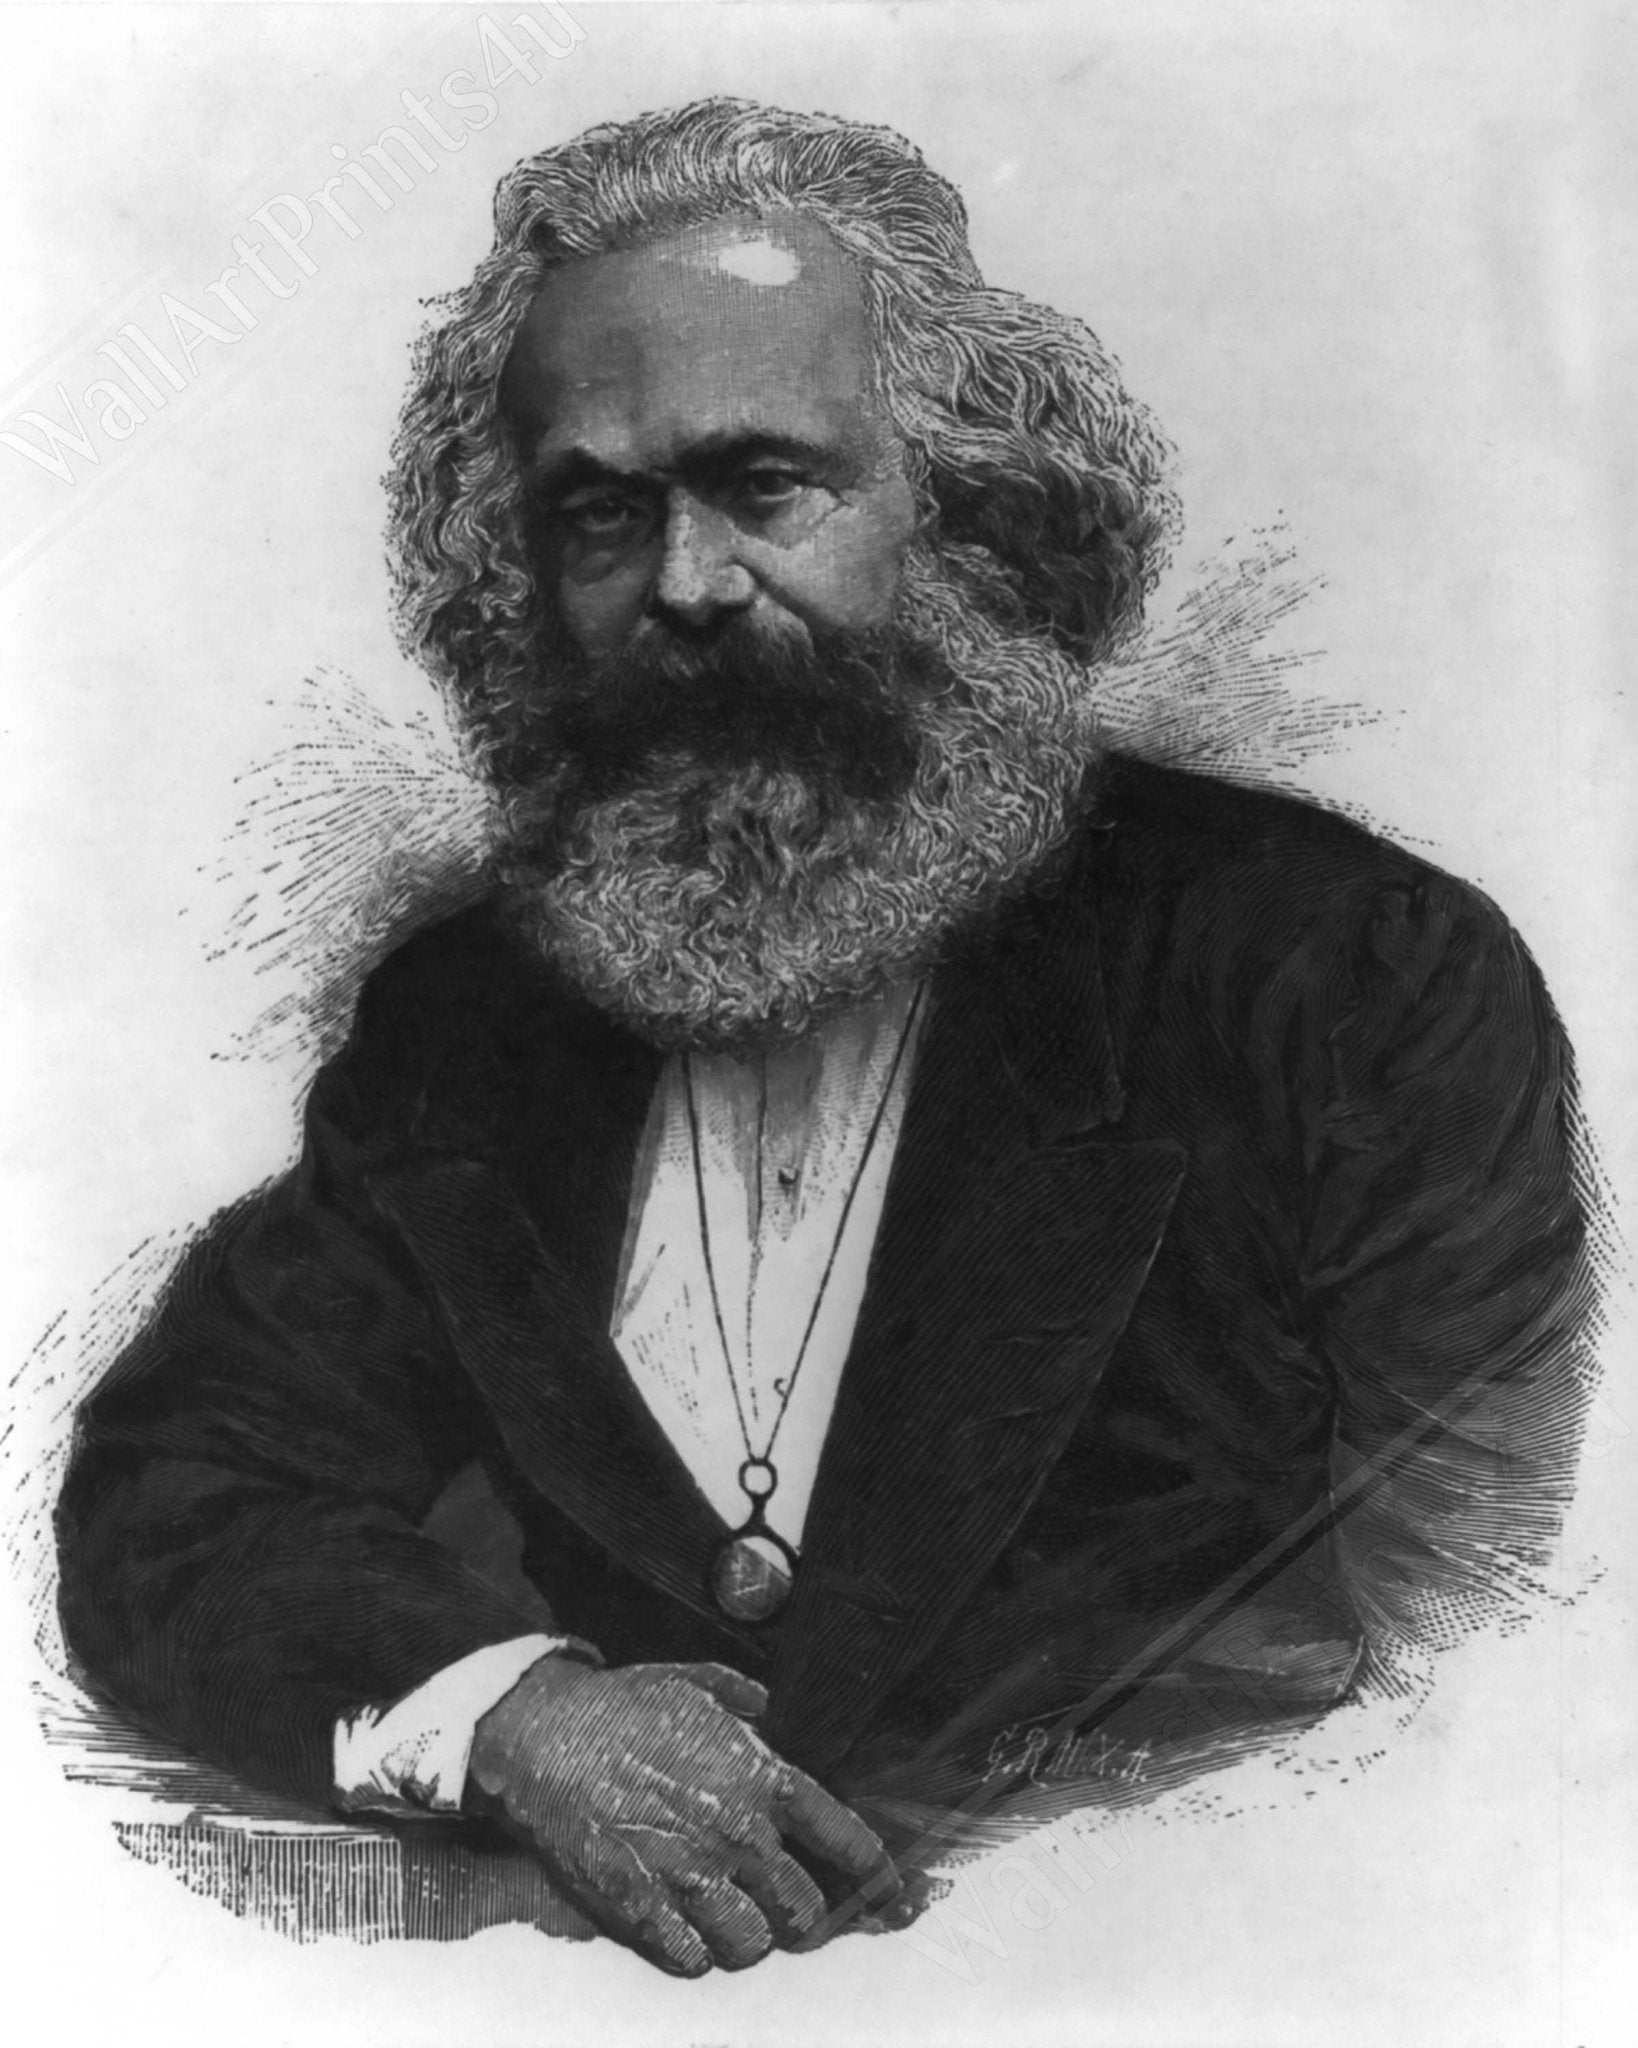 Karl Marx Canvas, Socialist Revolutionary, Vintage Photo - Iconic Karl Marx Canvas Print - Marxist Politics Philosophy - WallArtPrints4U